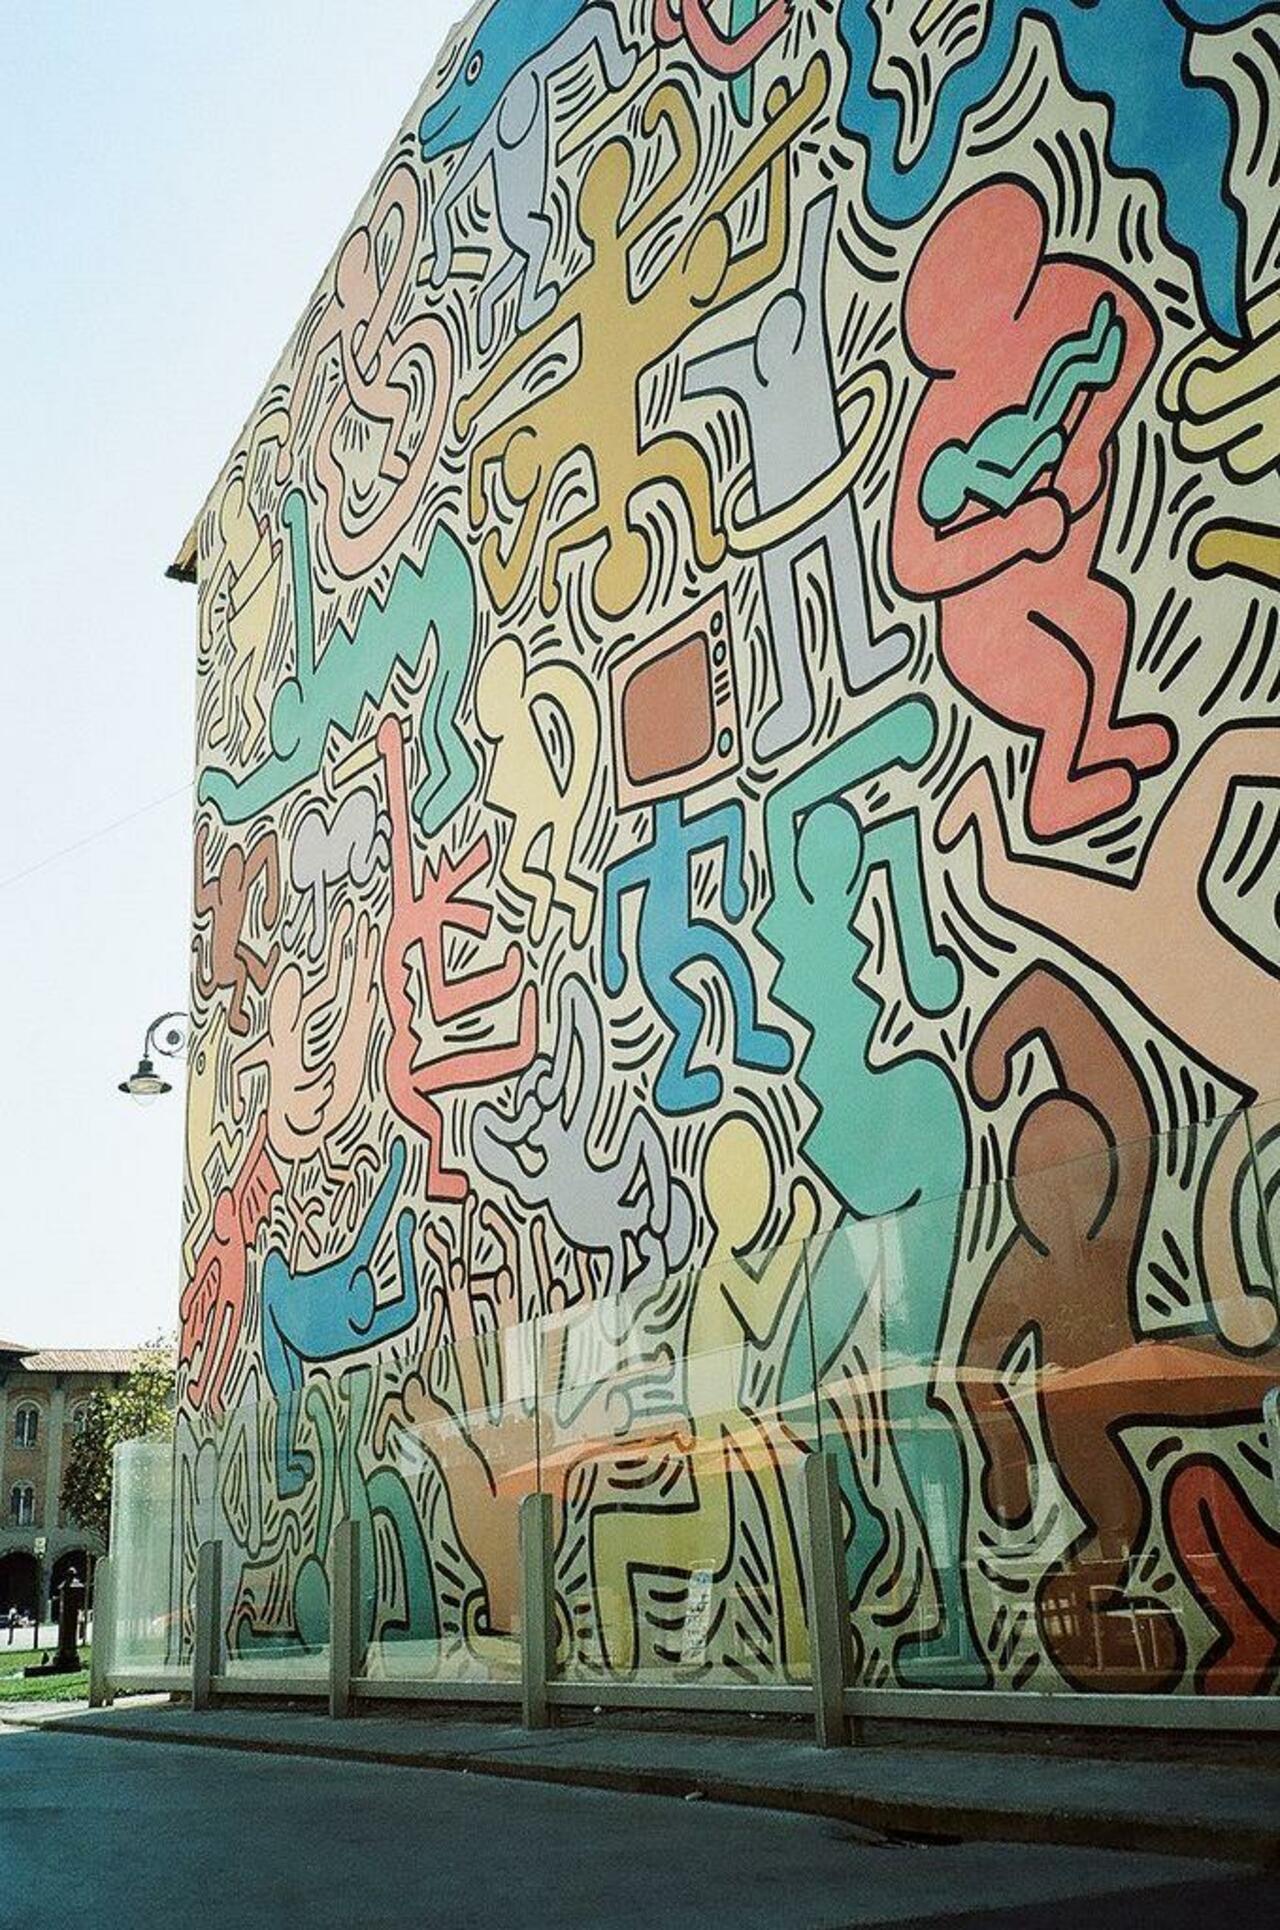 “@StreetArtBuzz: Keith Haring's 1989  https://twib.in/l/jzGeRzeEdGK #art #design #graffiti http://t.co/VBfuj1NKhV”

Poke @opiofamily